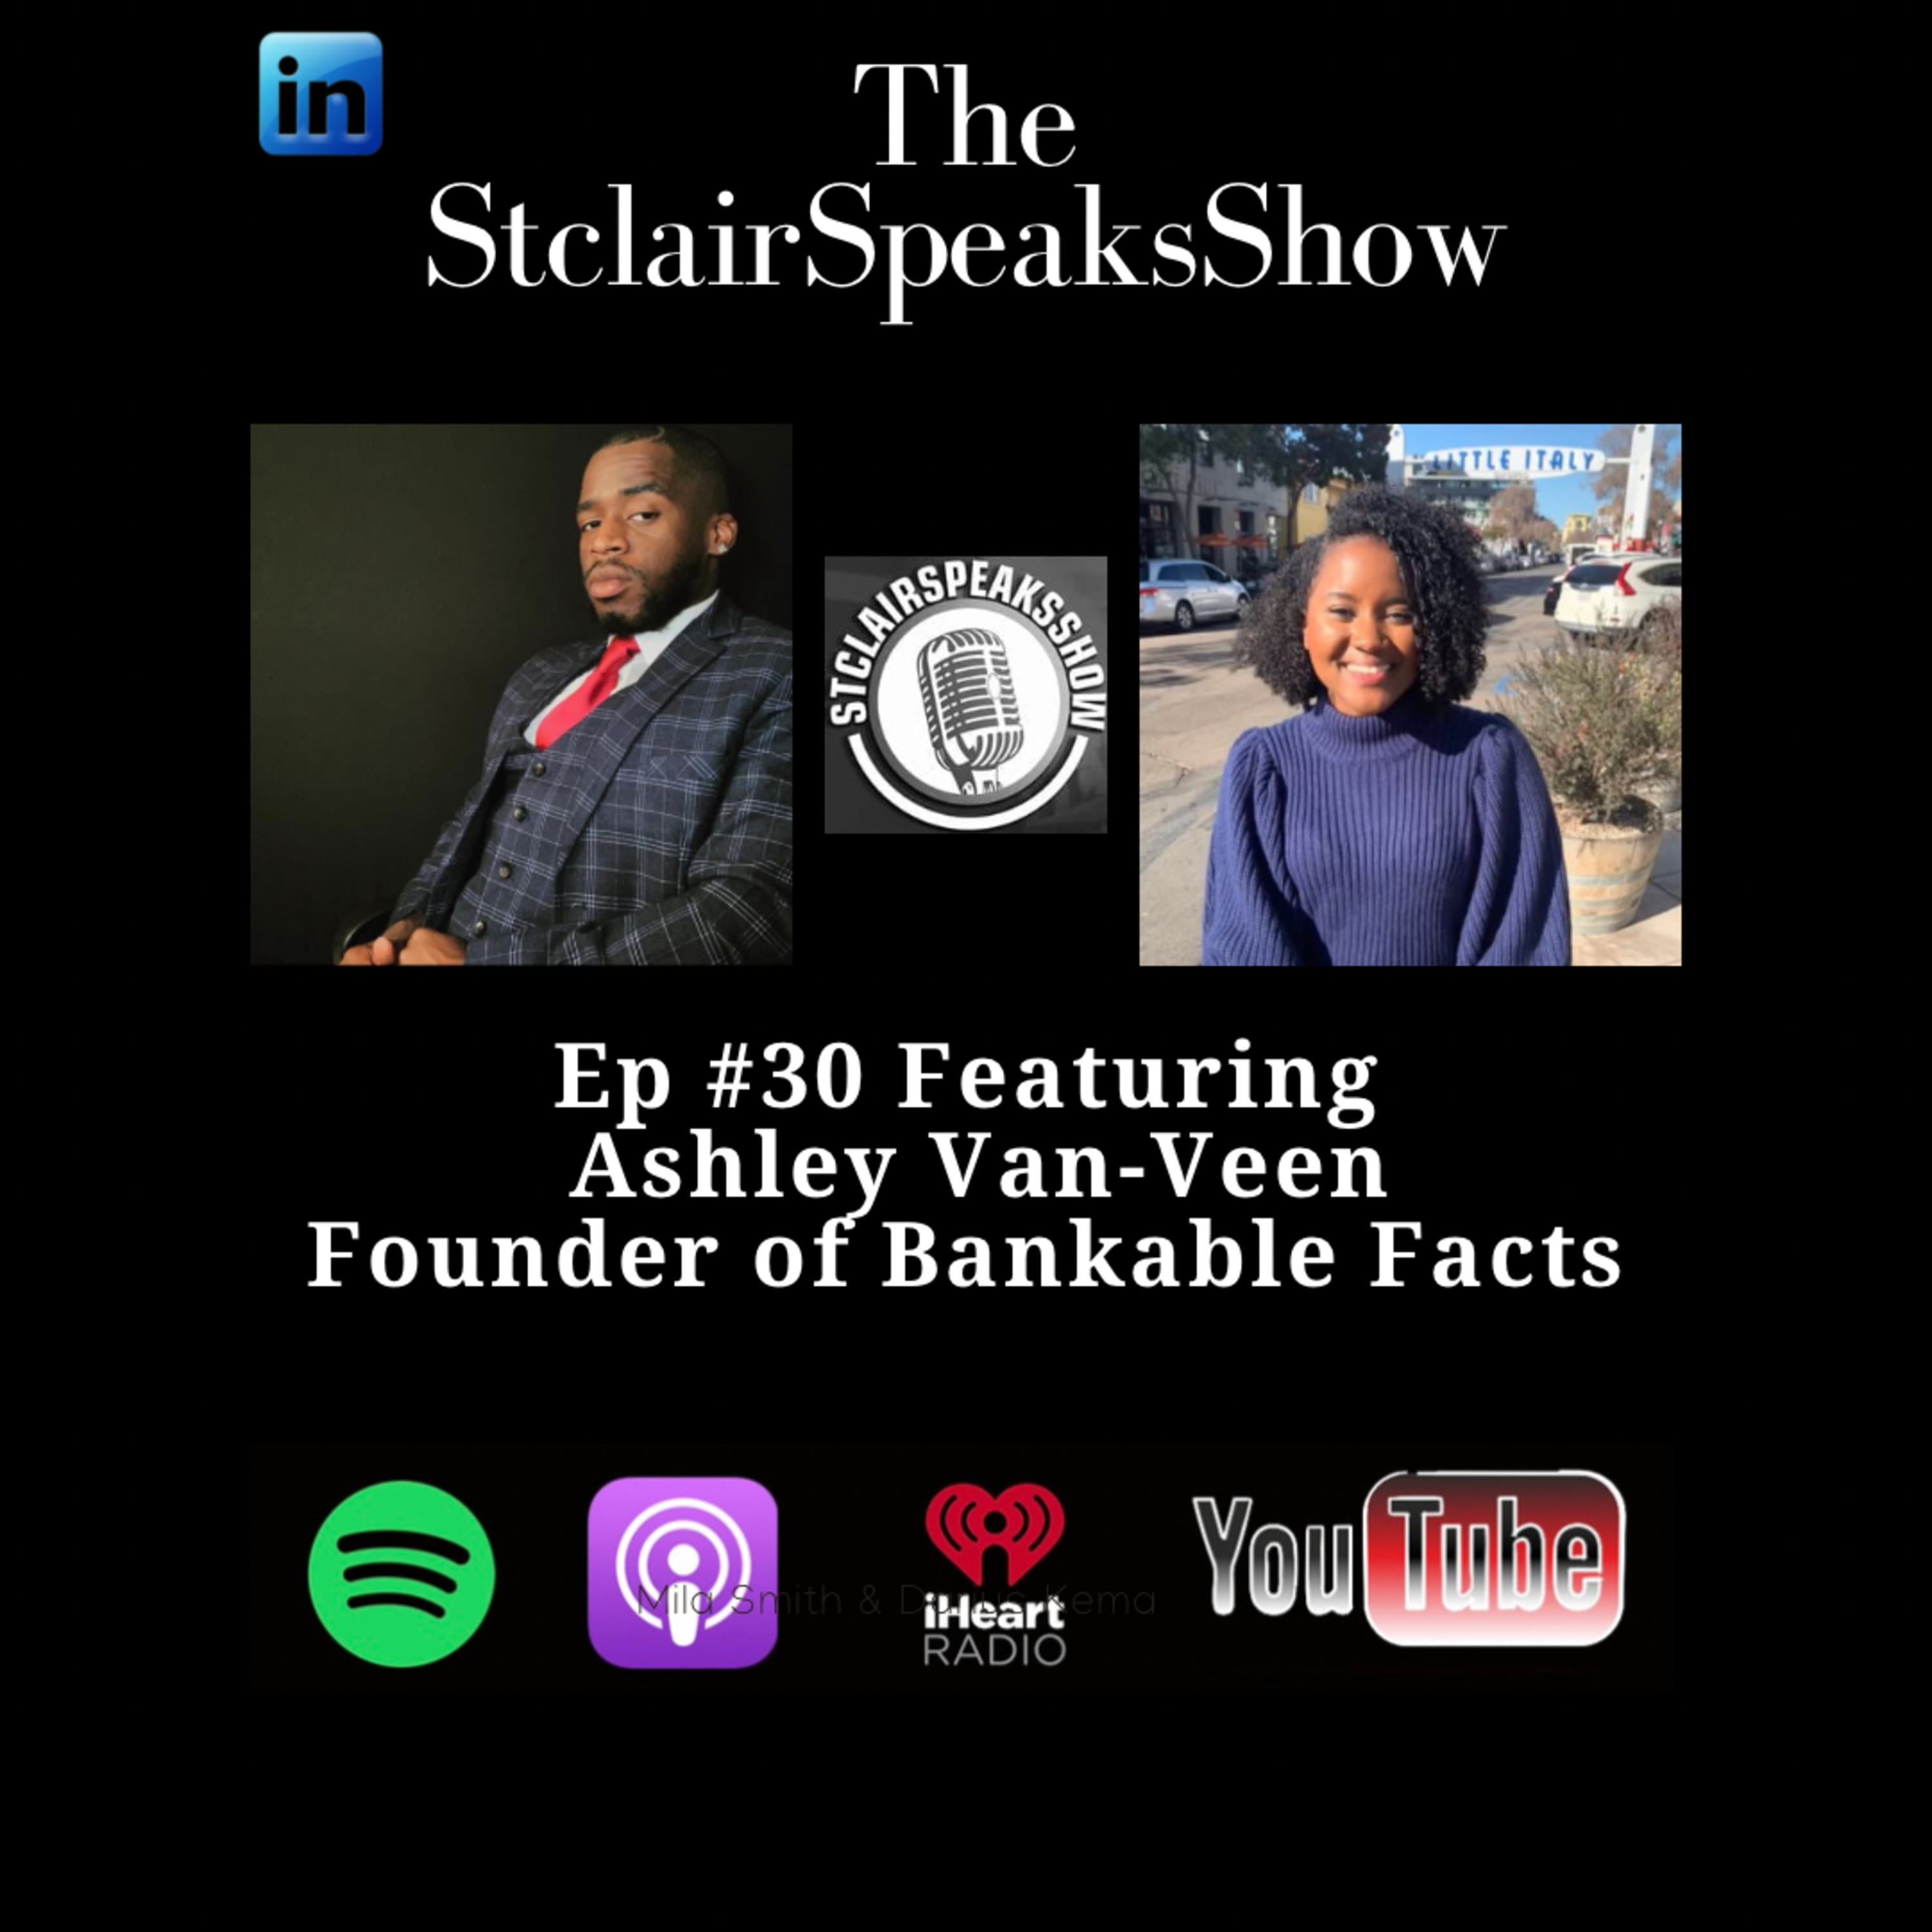 The StClairSpeaks Show Episode 30 Featuring Ashley Van-Veen Image